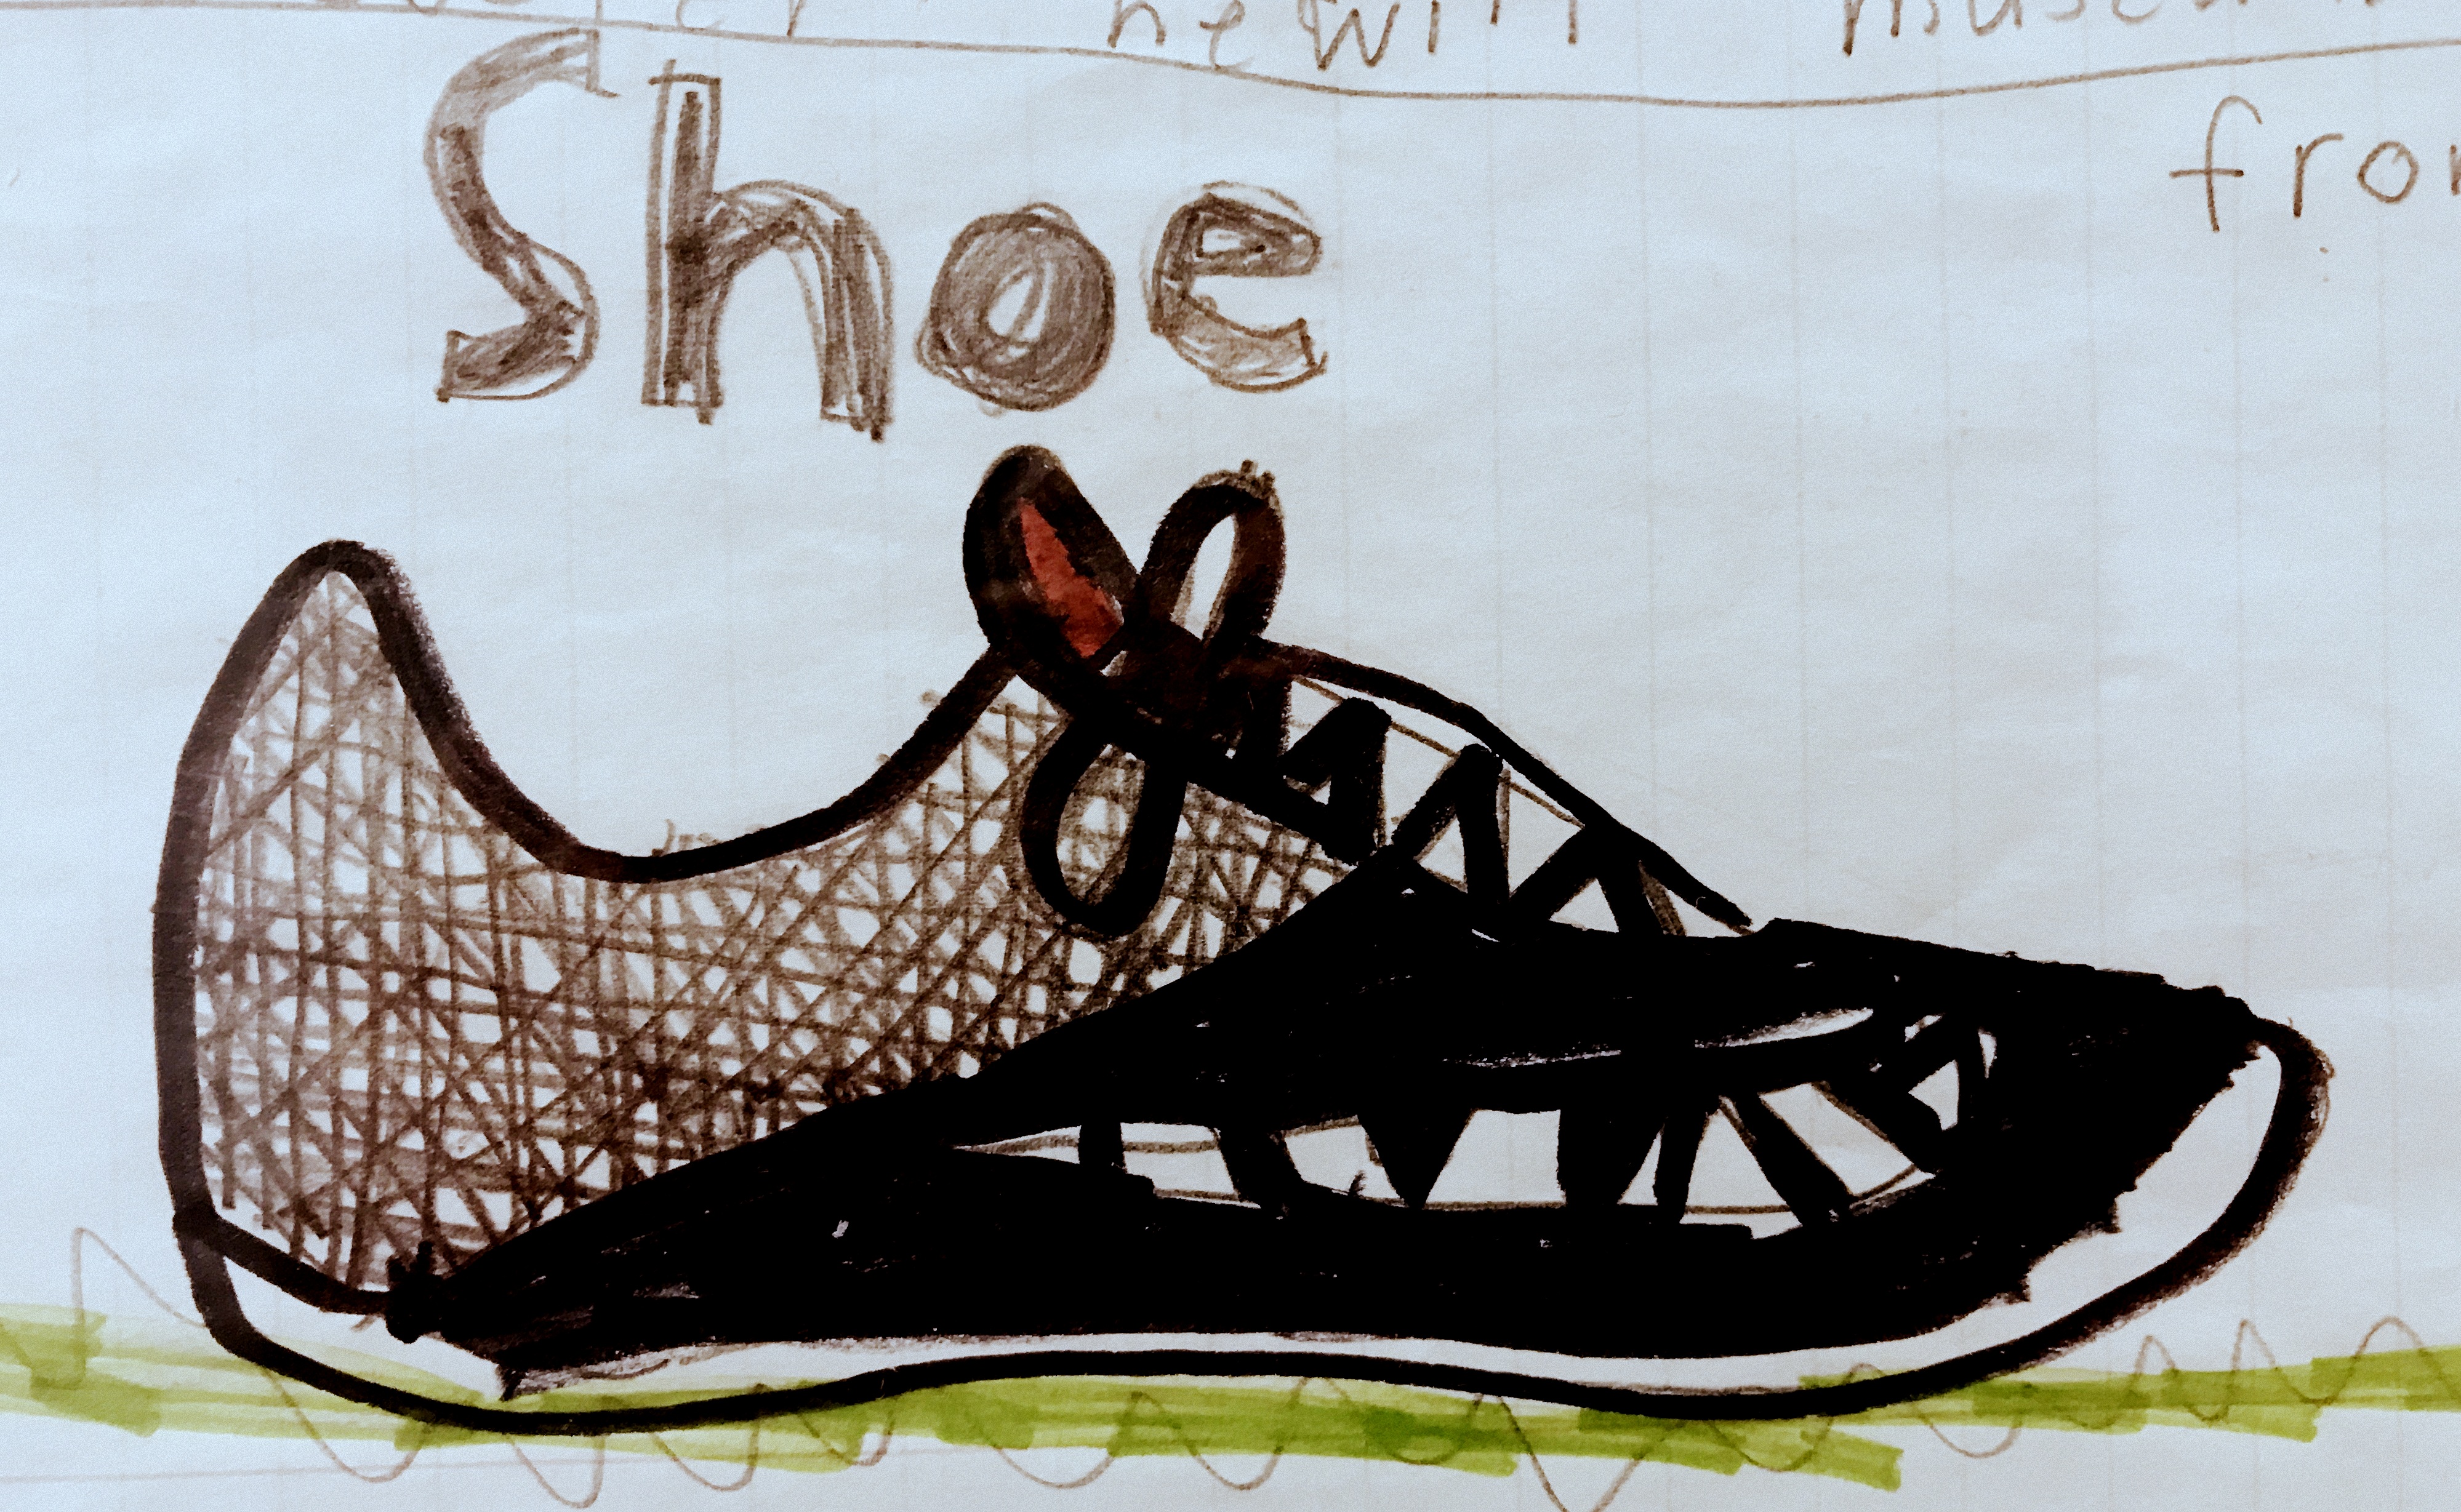 shoe